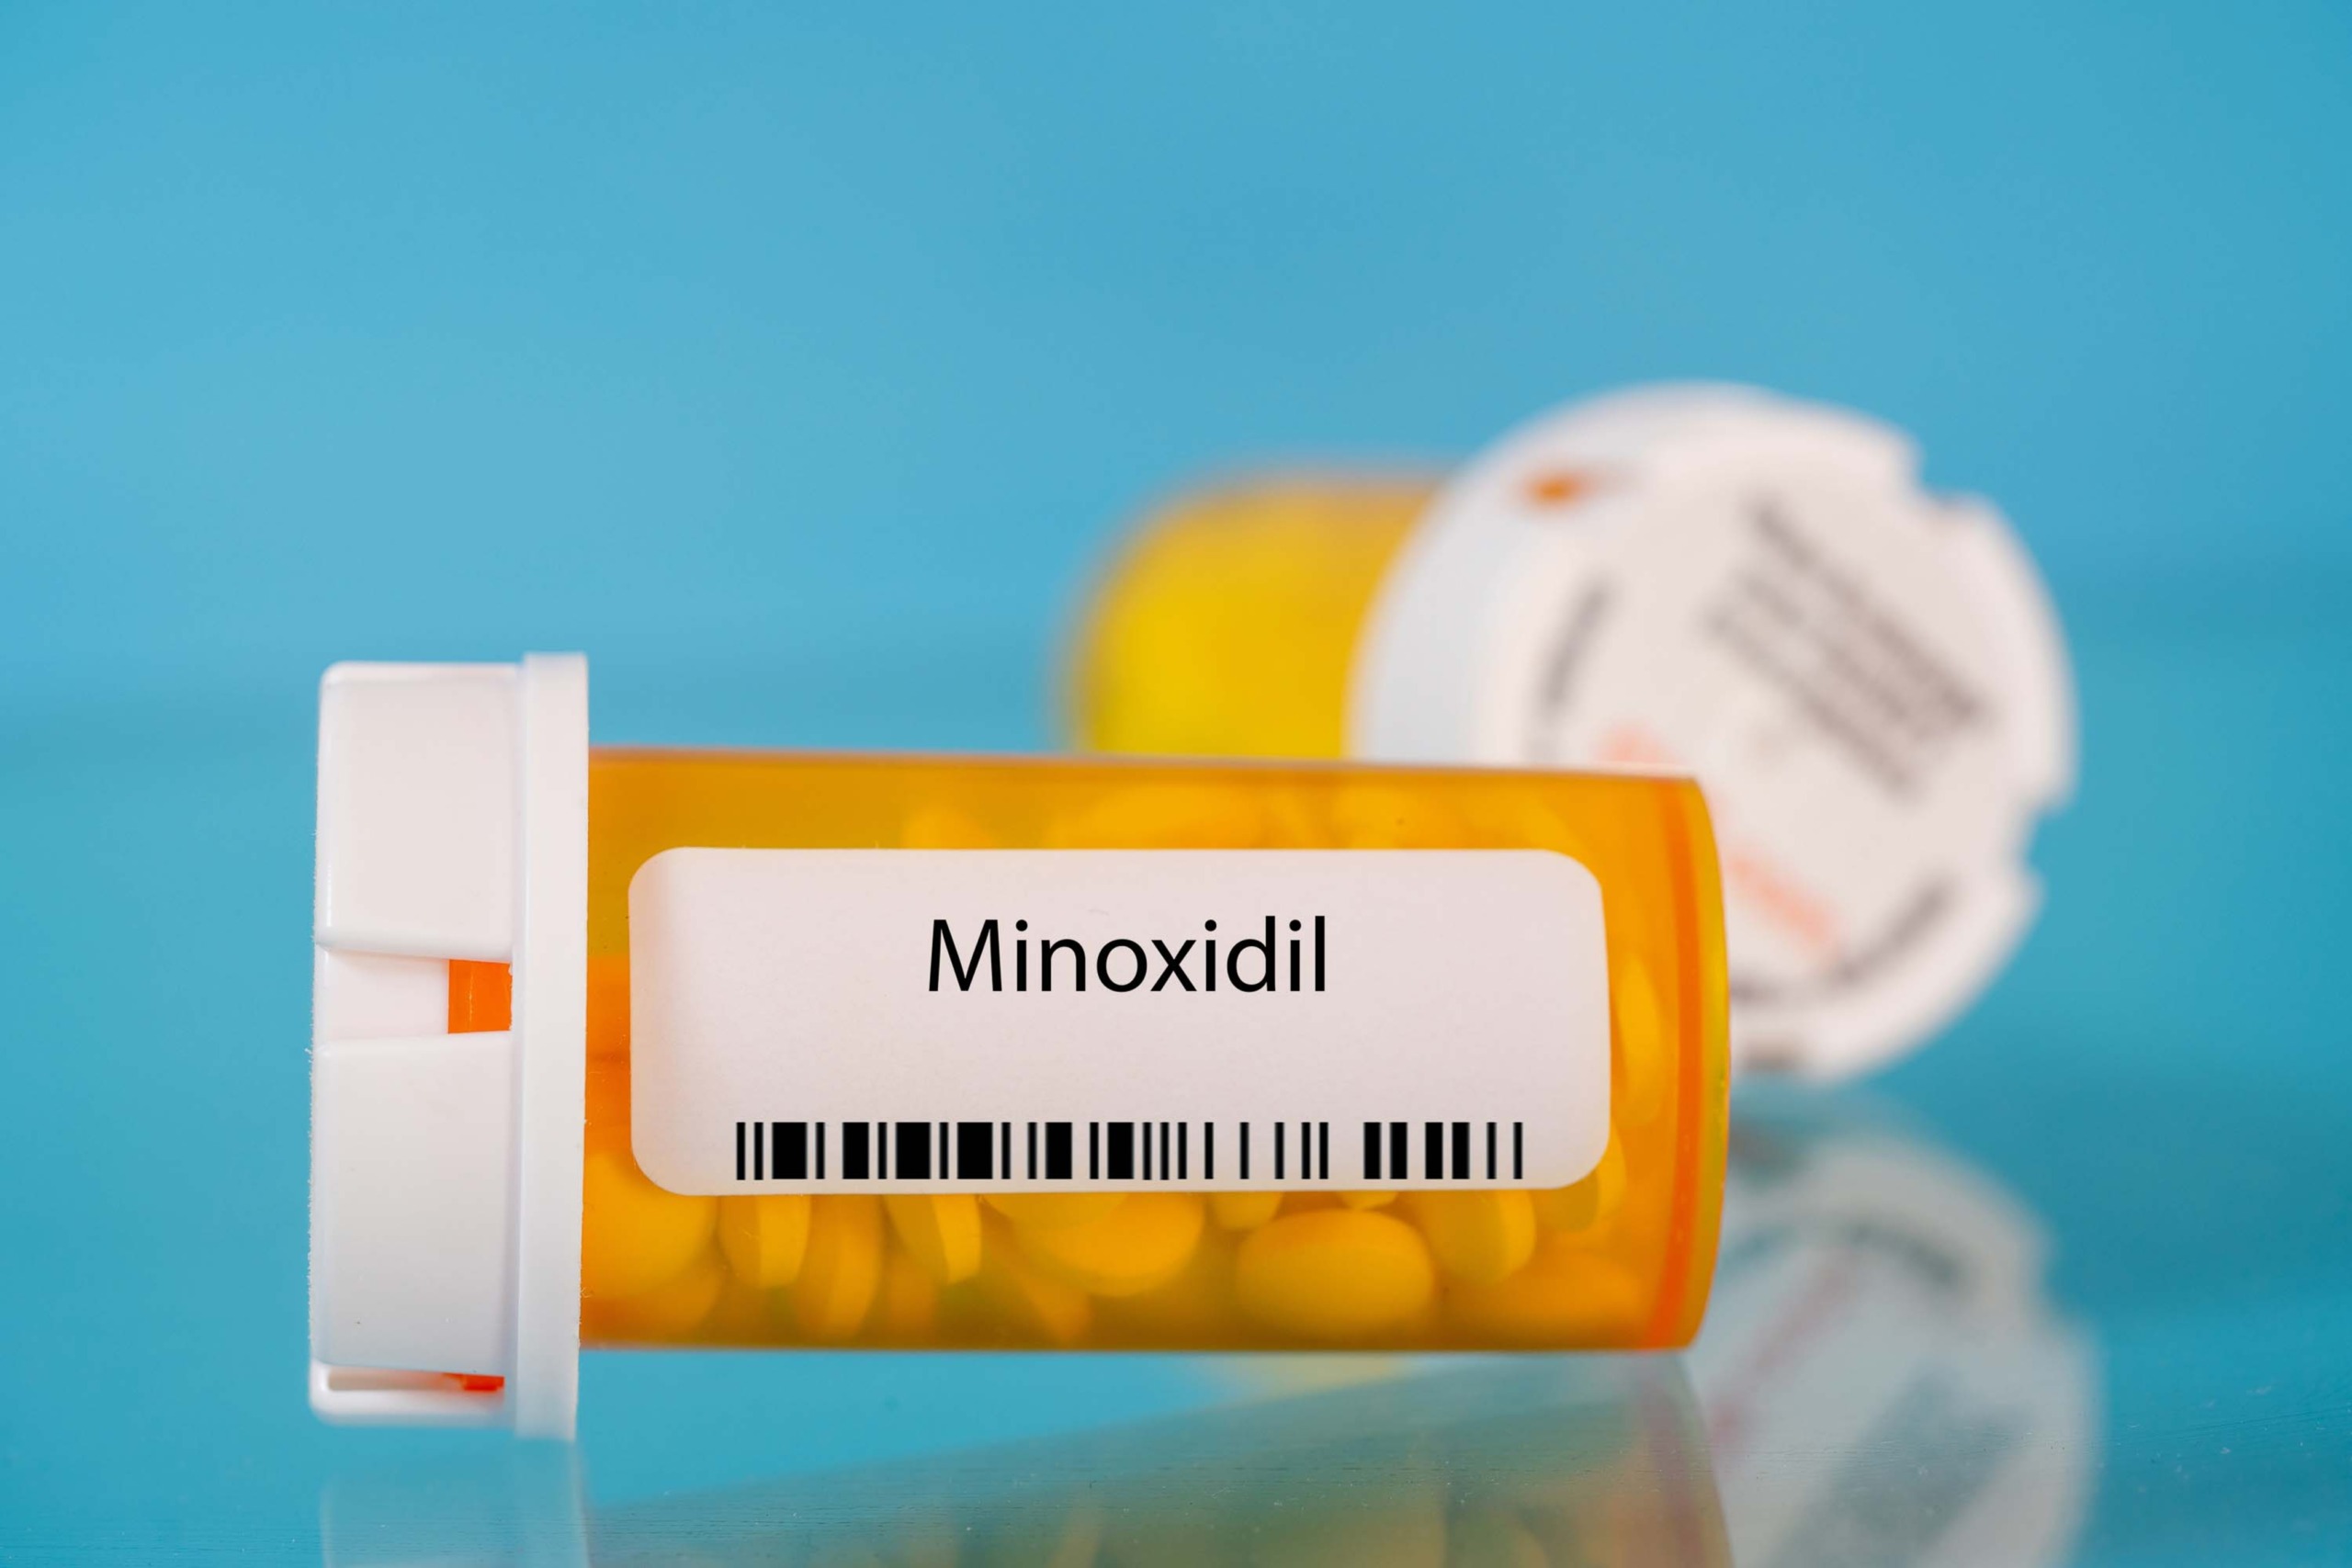 A bottle of Minoxidil tablets